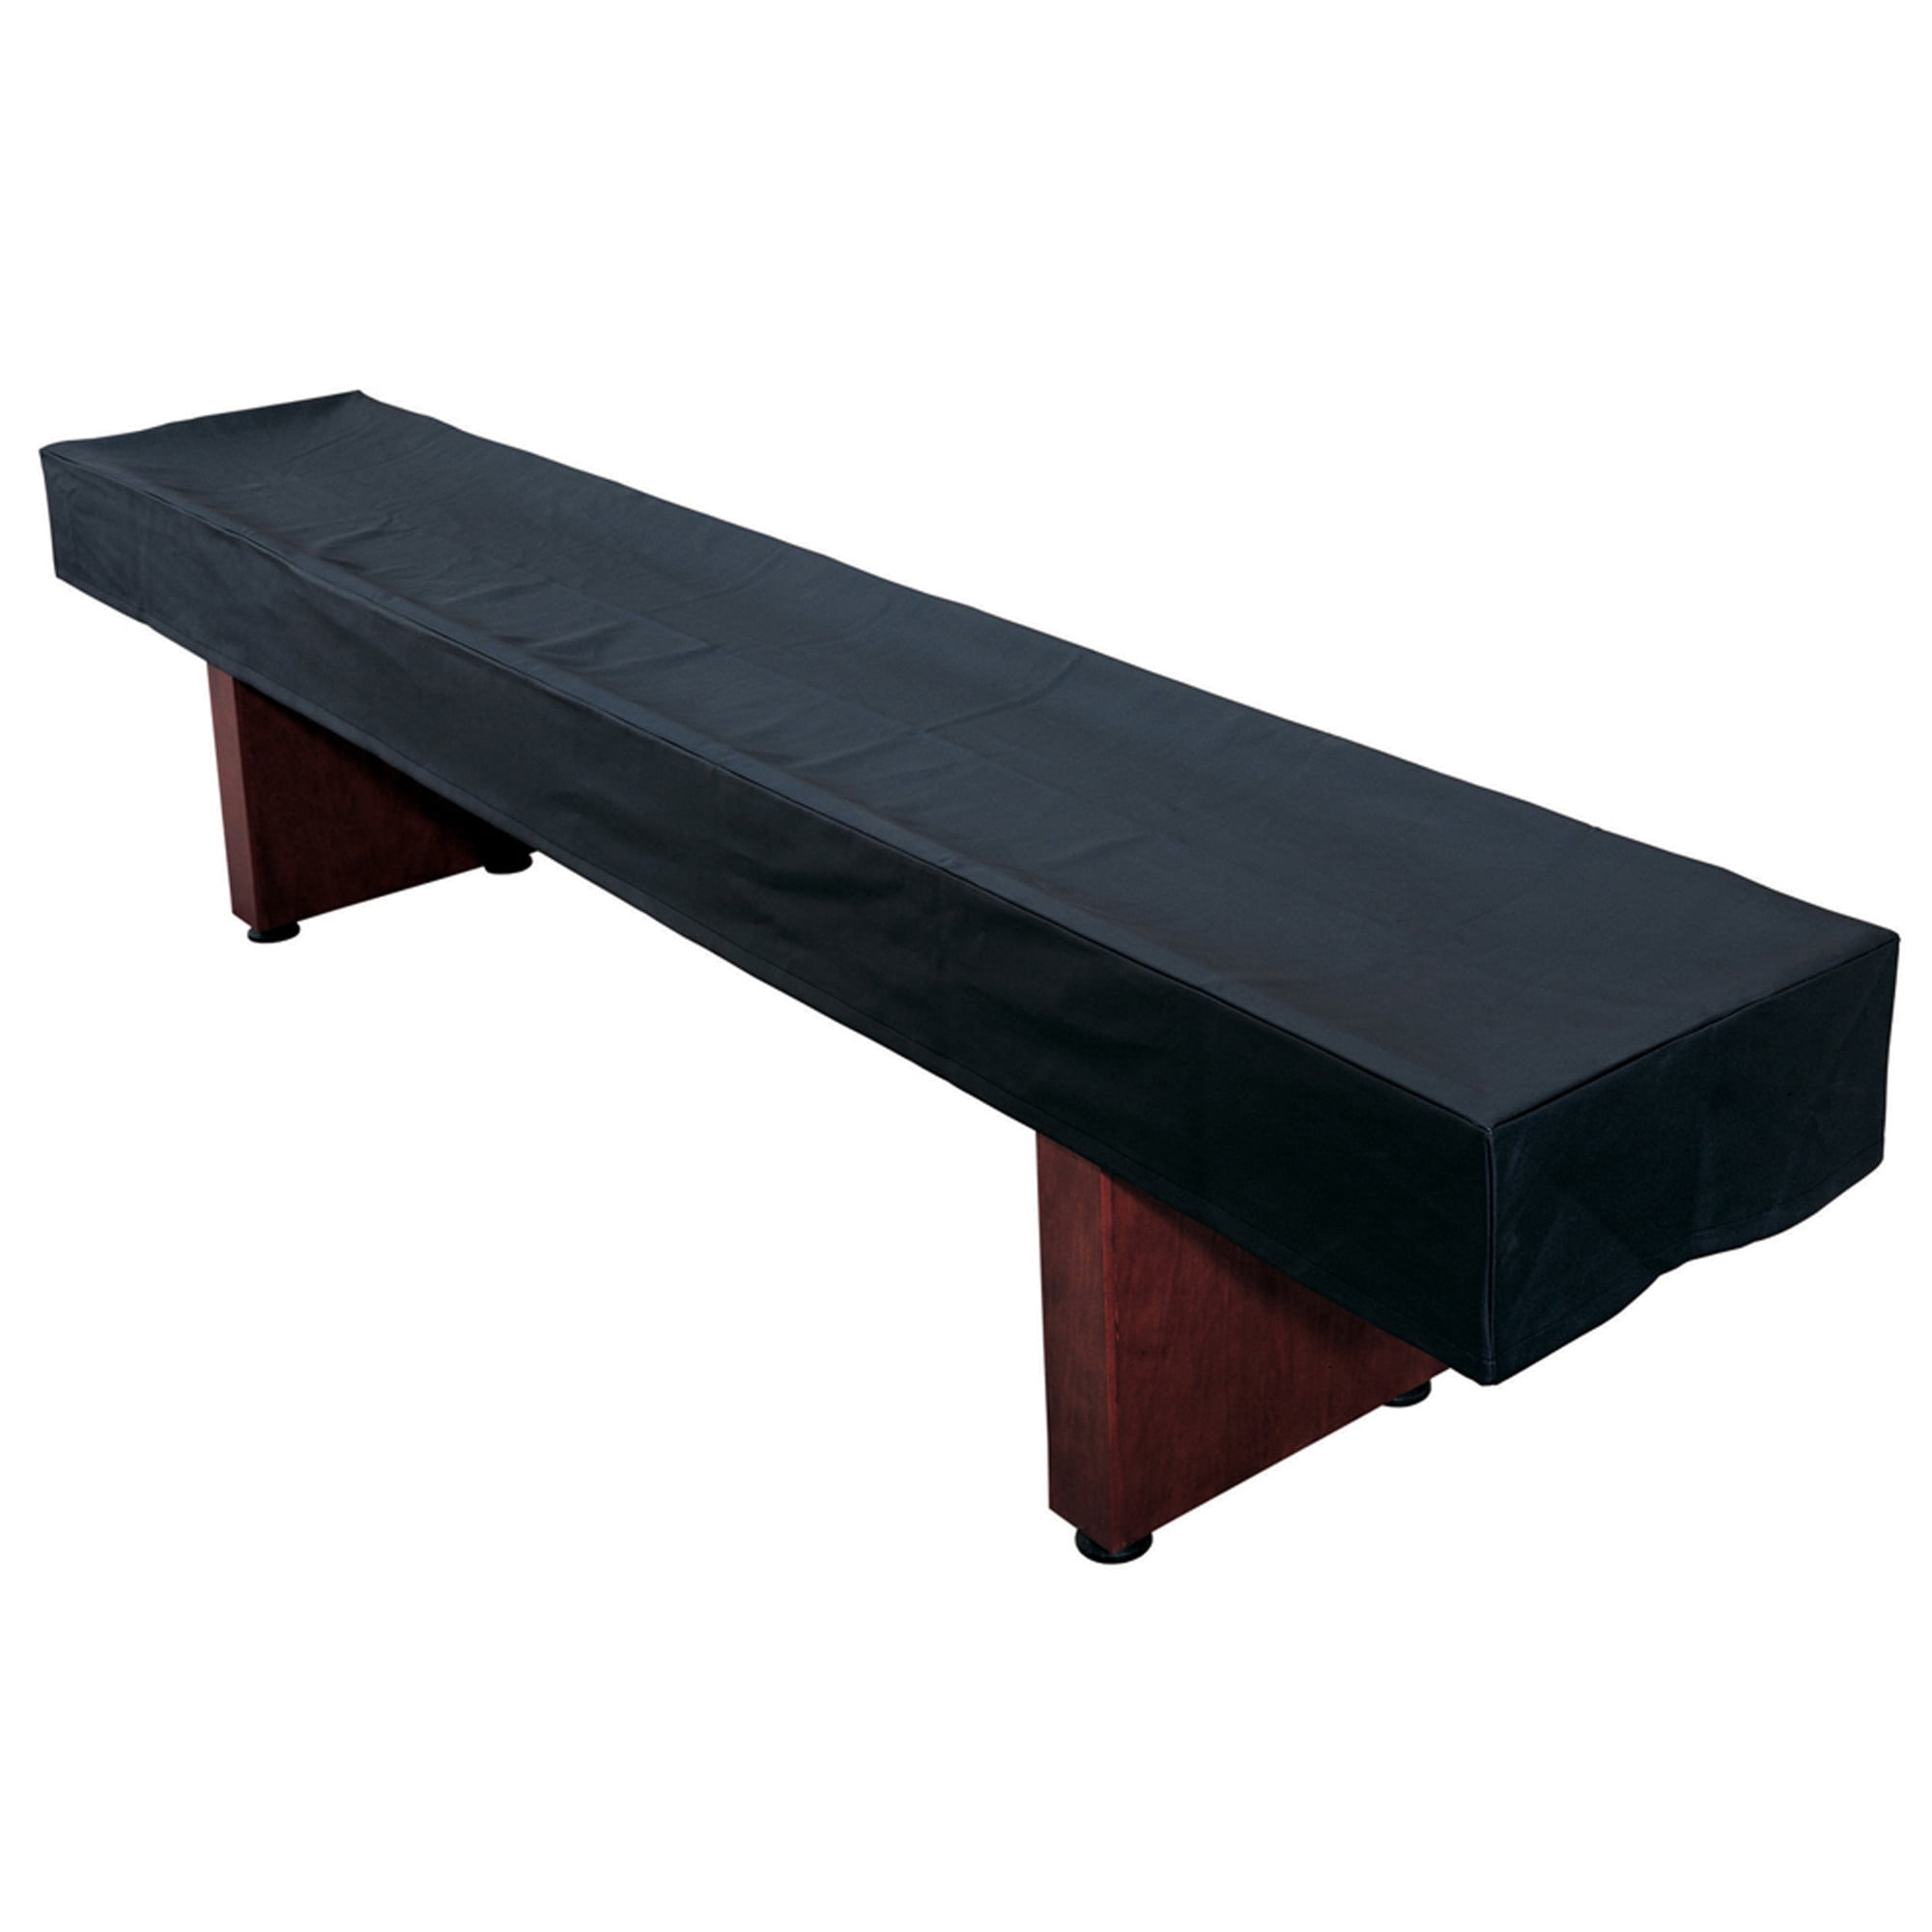 COOSOO Shuffleboard Table Cover Waterproof Outdoor 9FT 12FT 14 FT Shuffleboard Table Cover Weather Resistant Dustproof Furniture Protective Black 